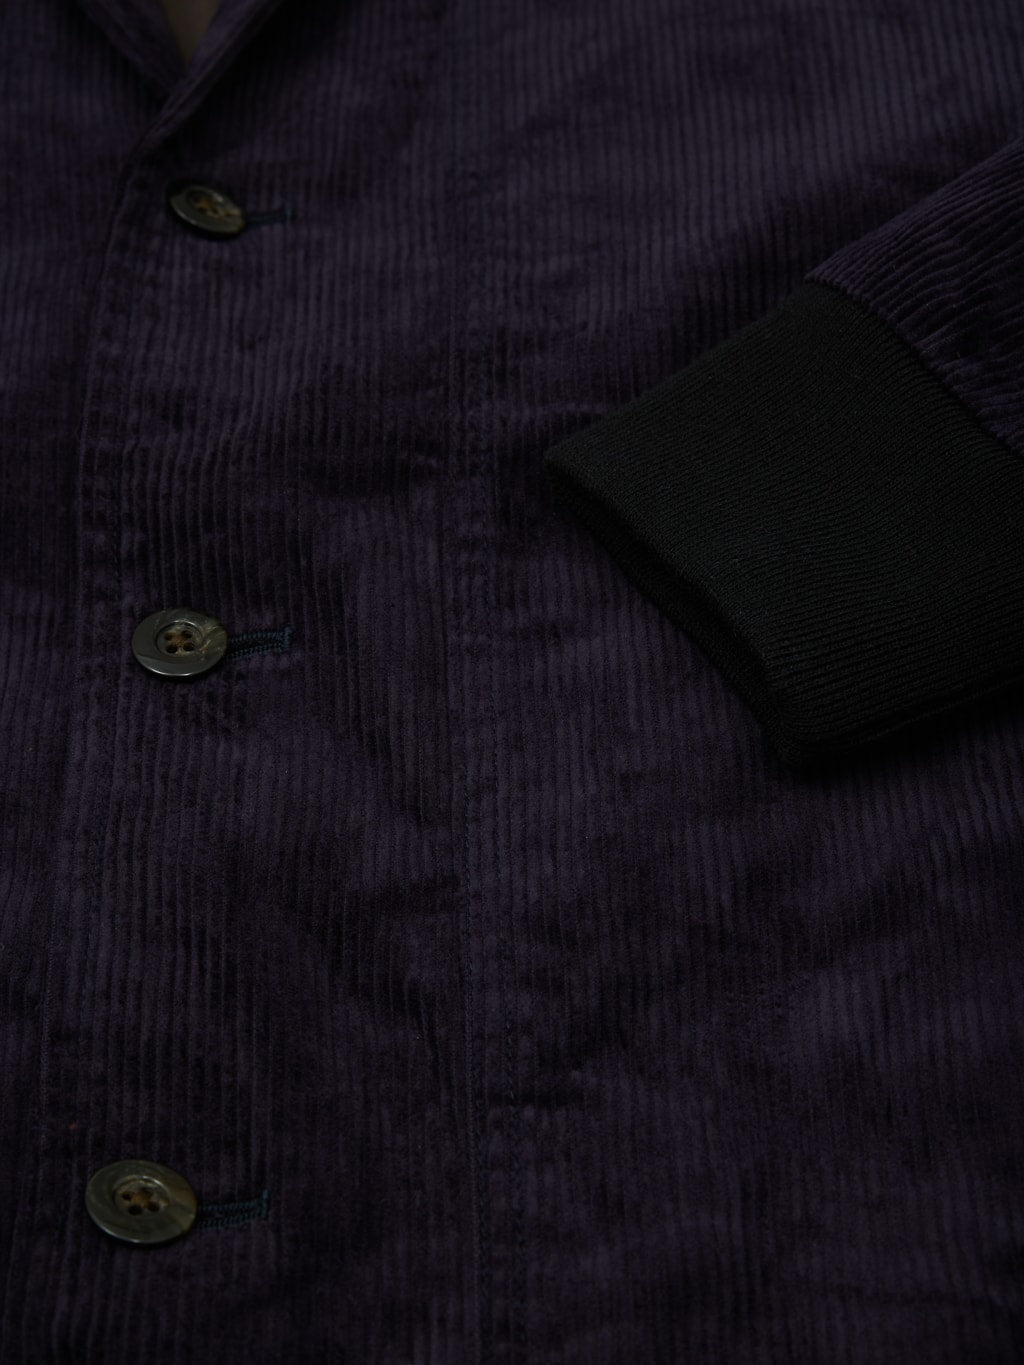 Tanuki Sazanami Corduroy natural indigo dyed Jacket elastic cuff